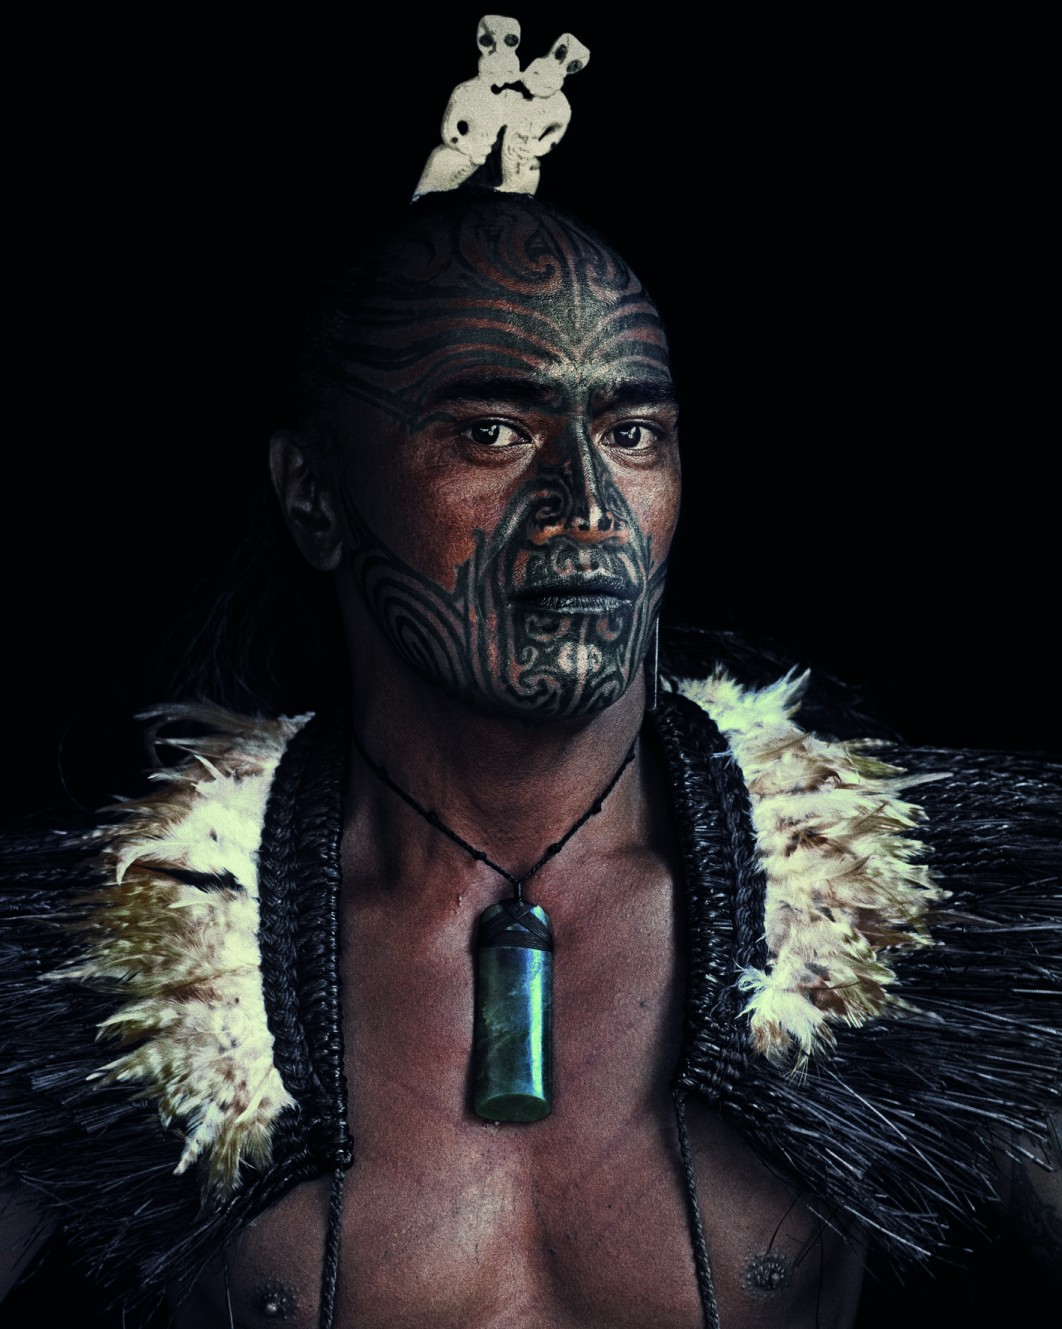 Stunning Photographs Of The World's Last Indigenous Tribes - TA MOKO